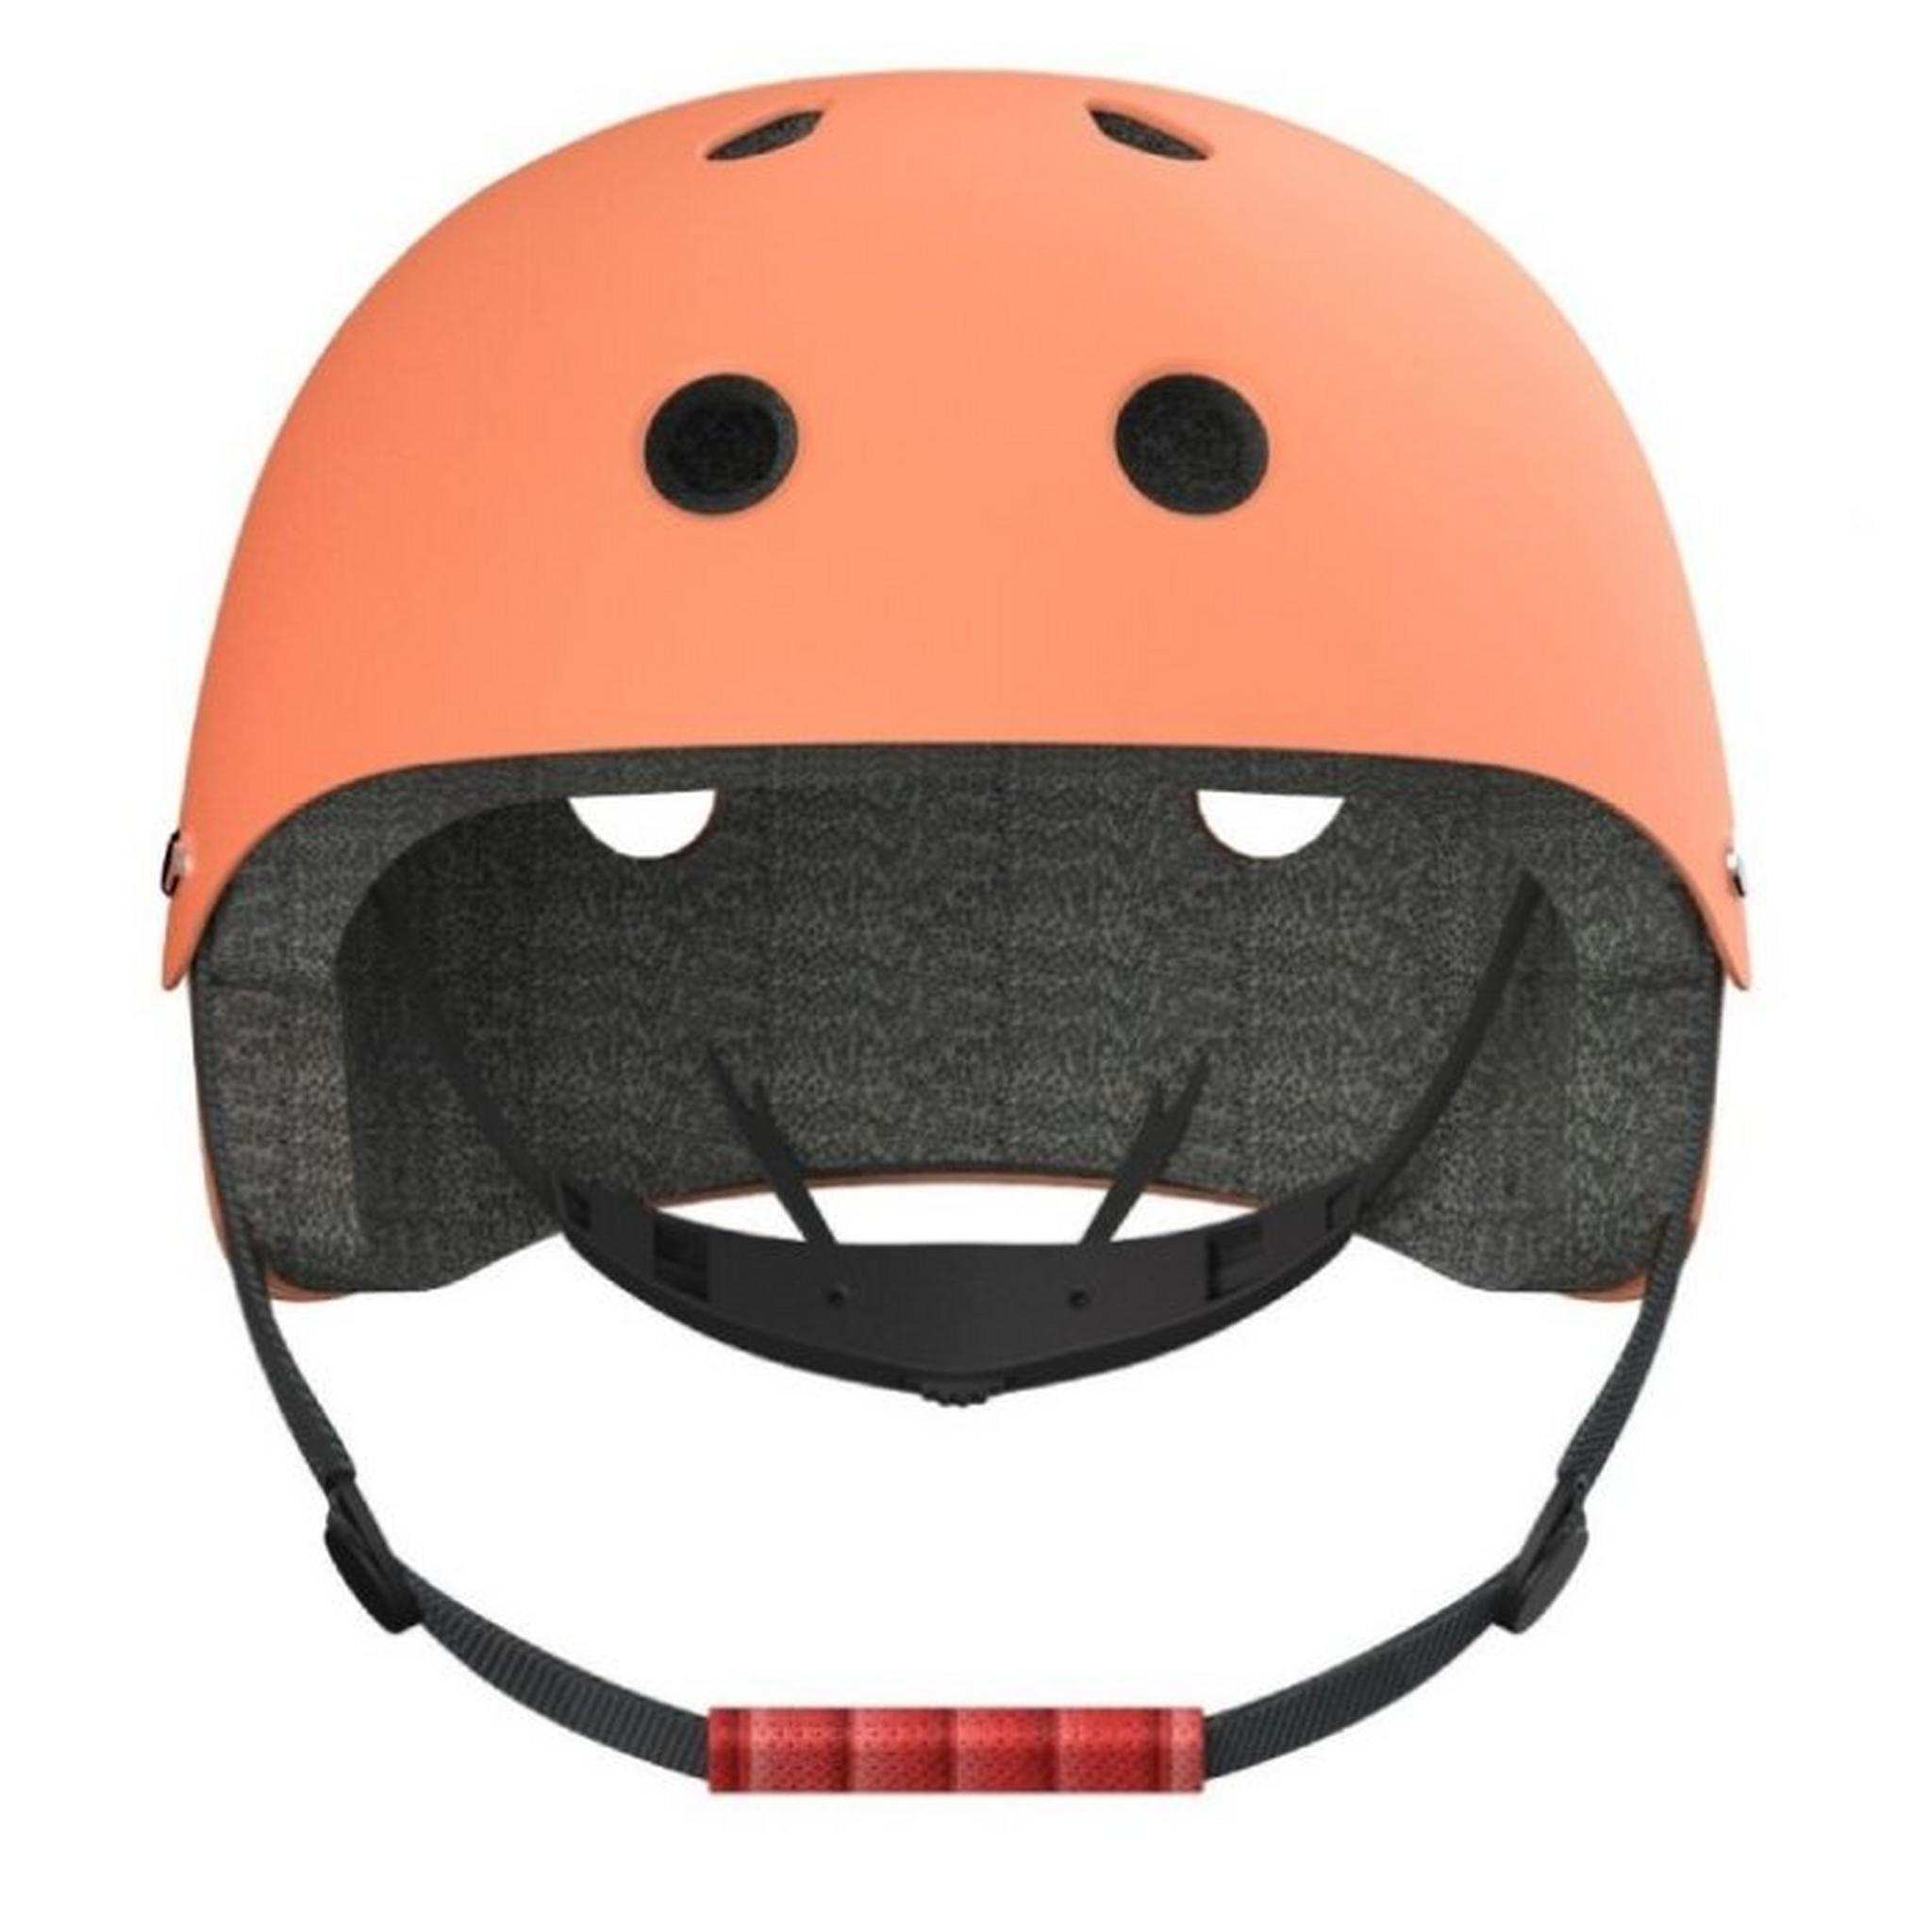 Segway Ninebot Adult Commuter Helmet - Orange